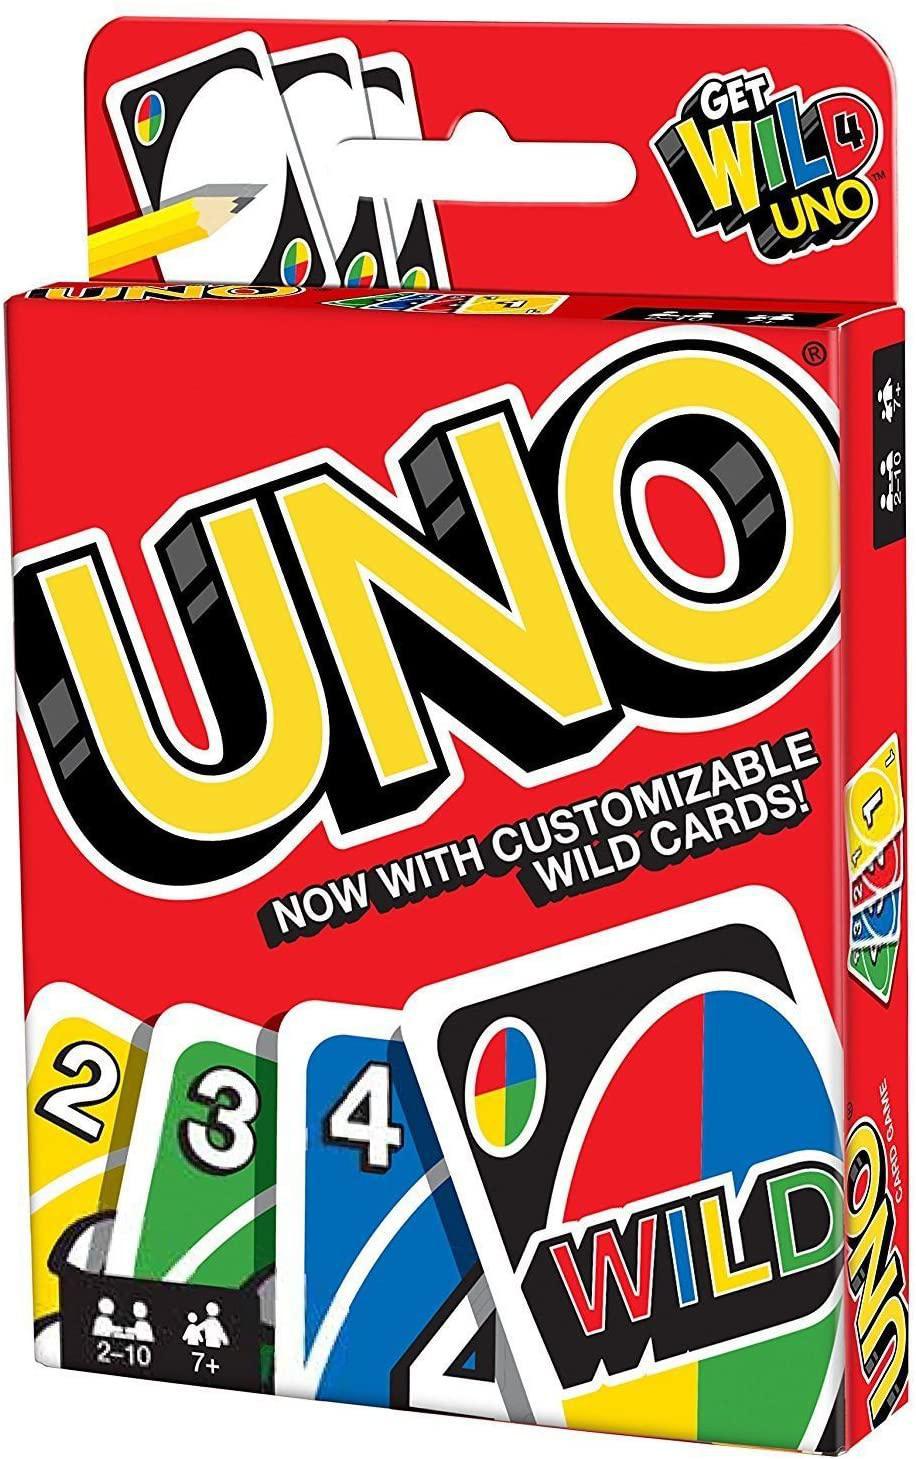 Best free online UNO game? : r/unocardgame